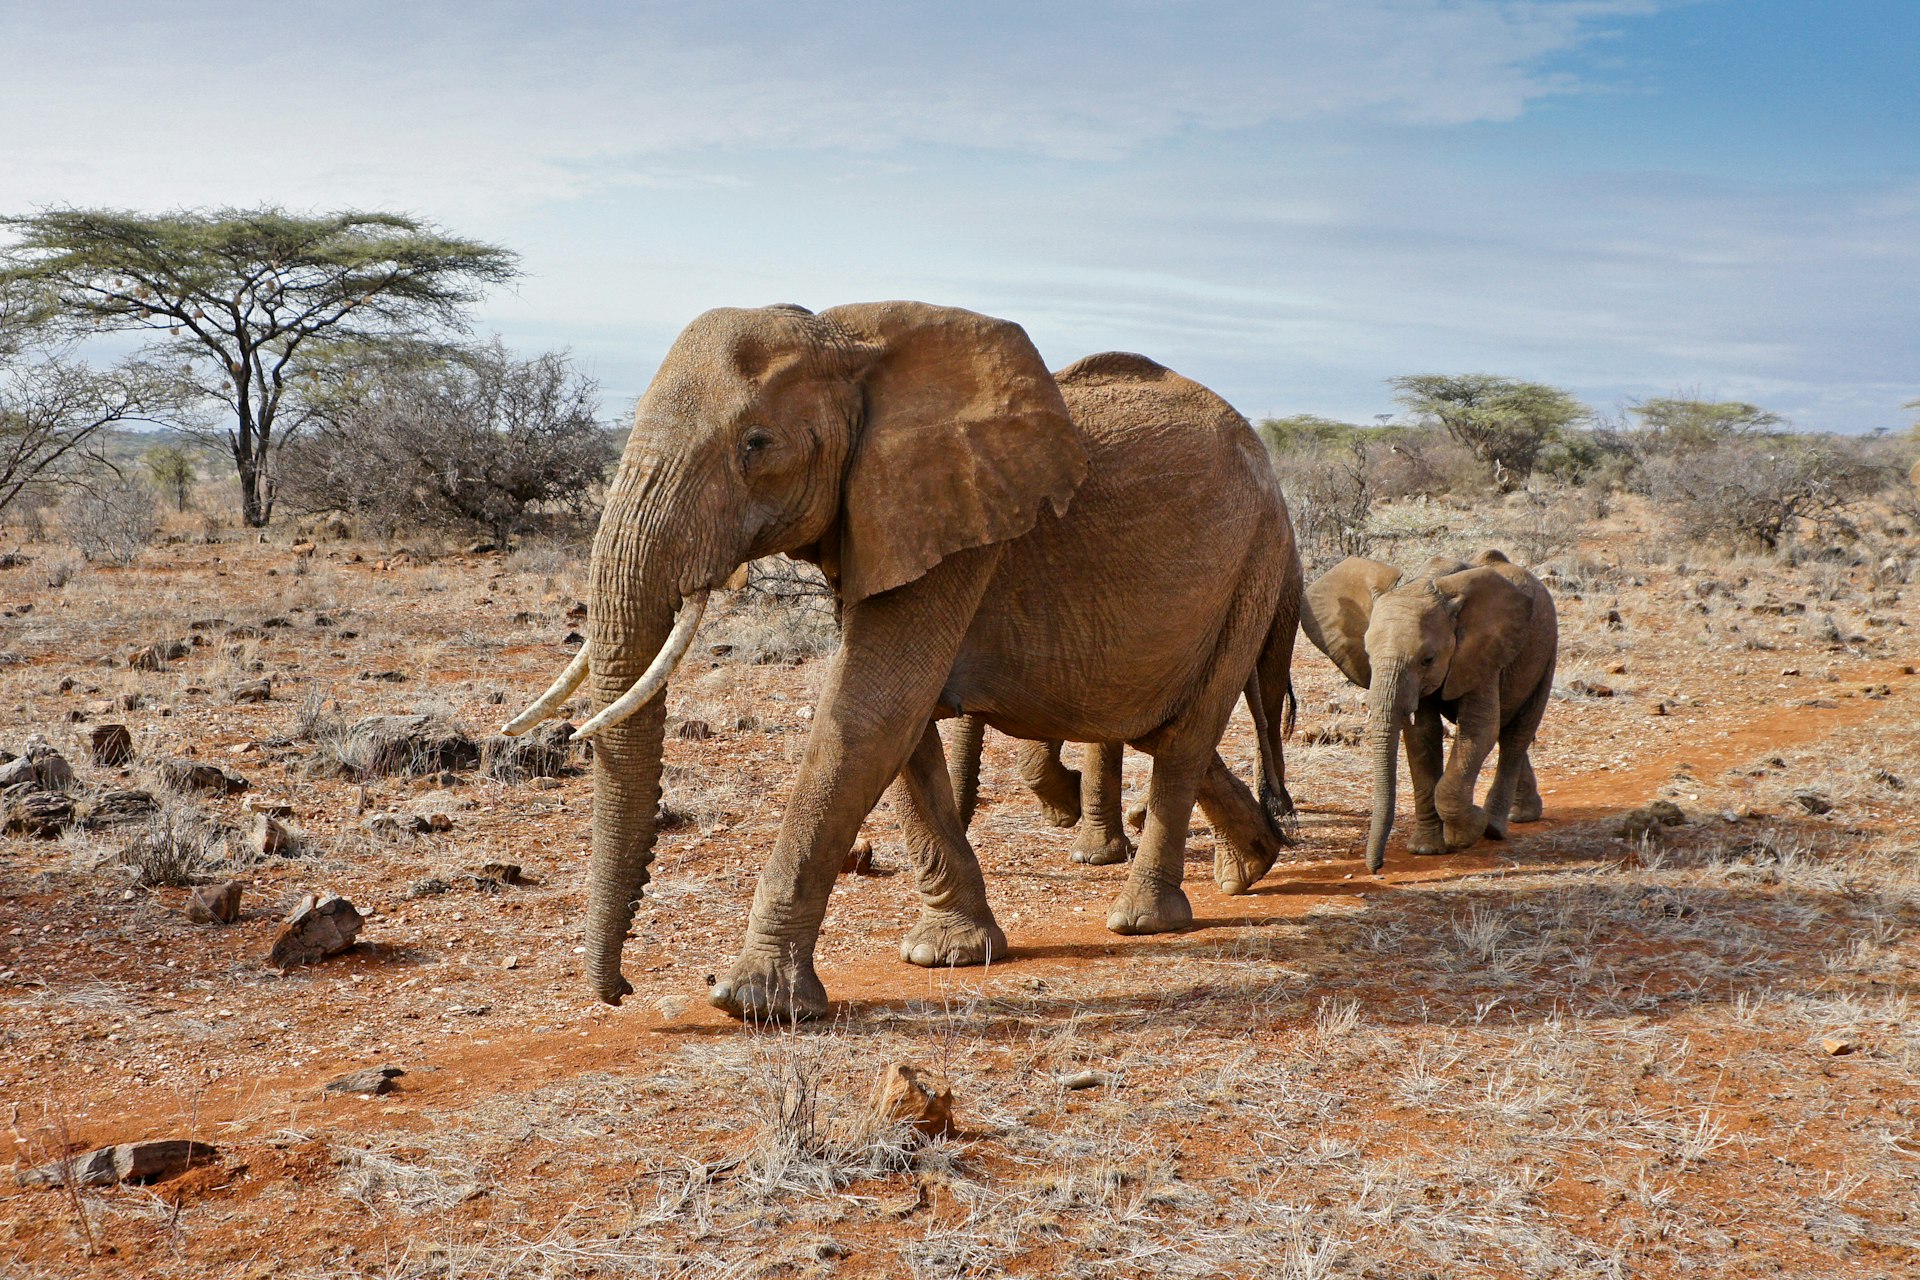 Female elephant and her two calves walking through arid landscape